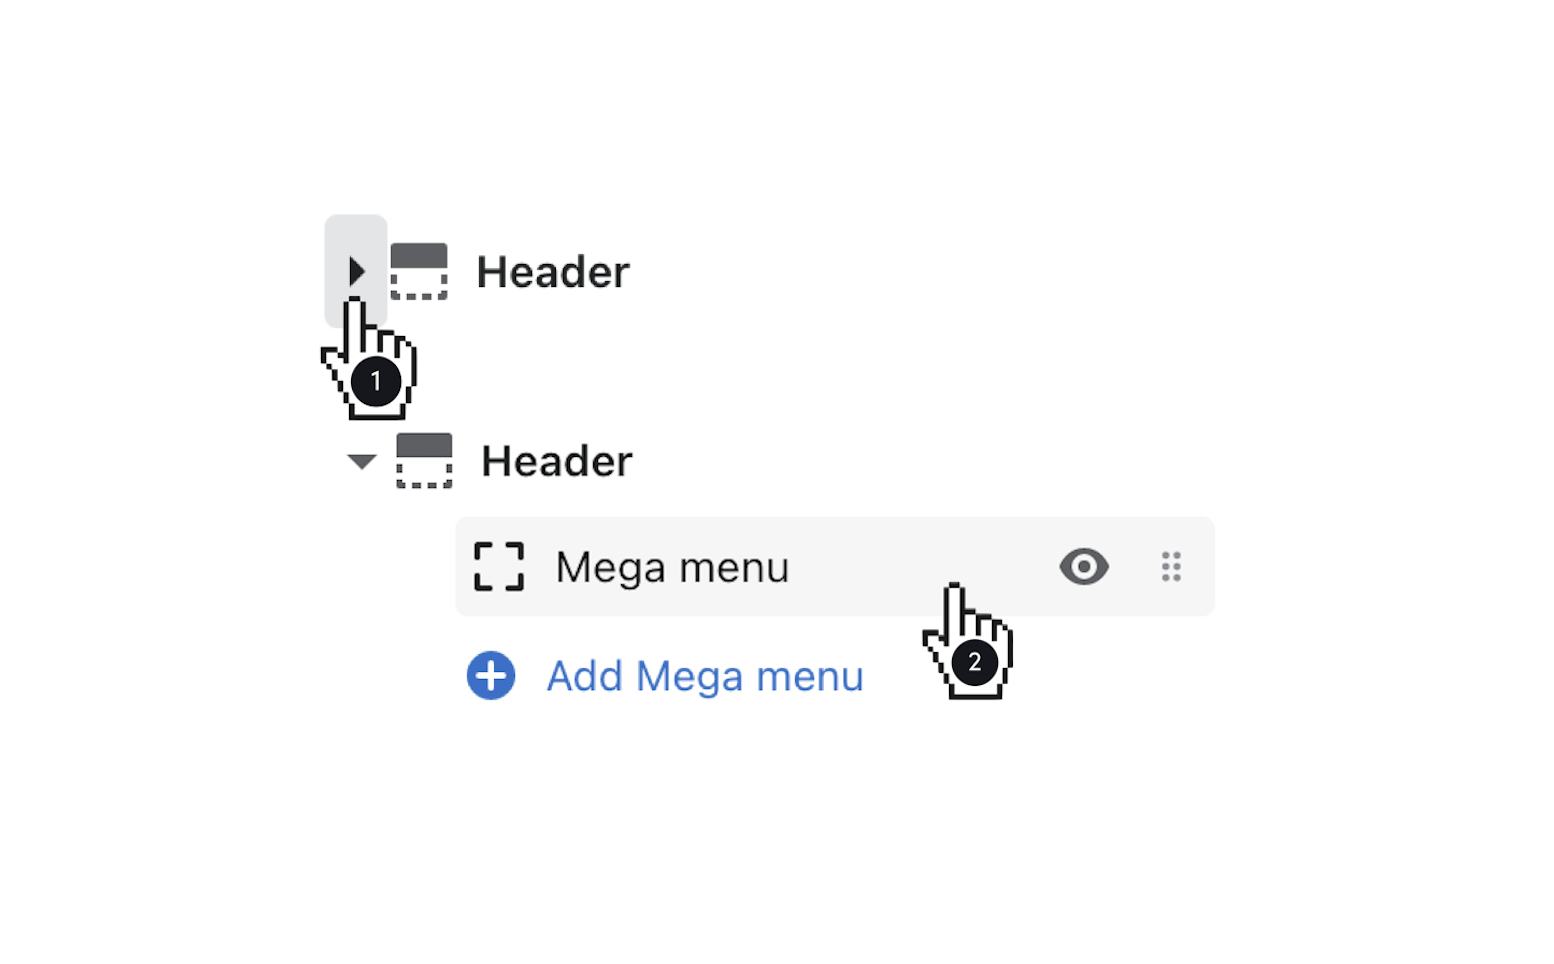 click_toggle_to_left_of_header_to_reveal_mega_menu_blocks.png